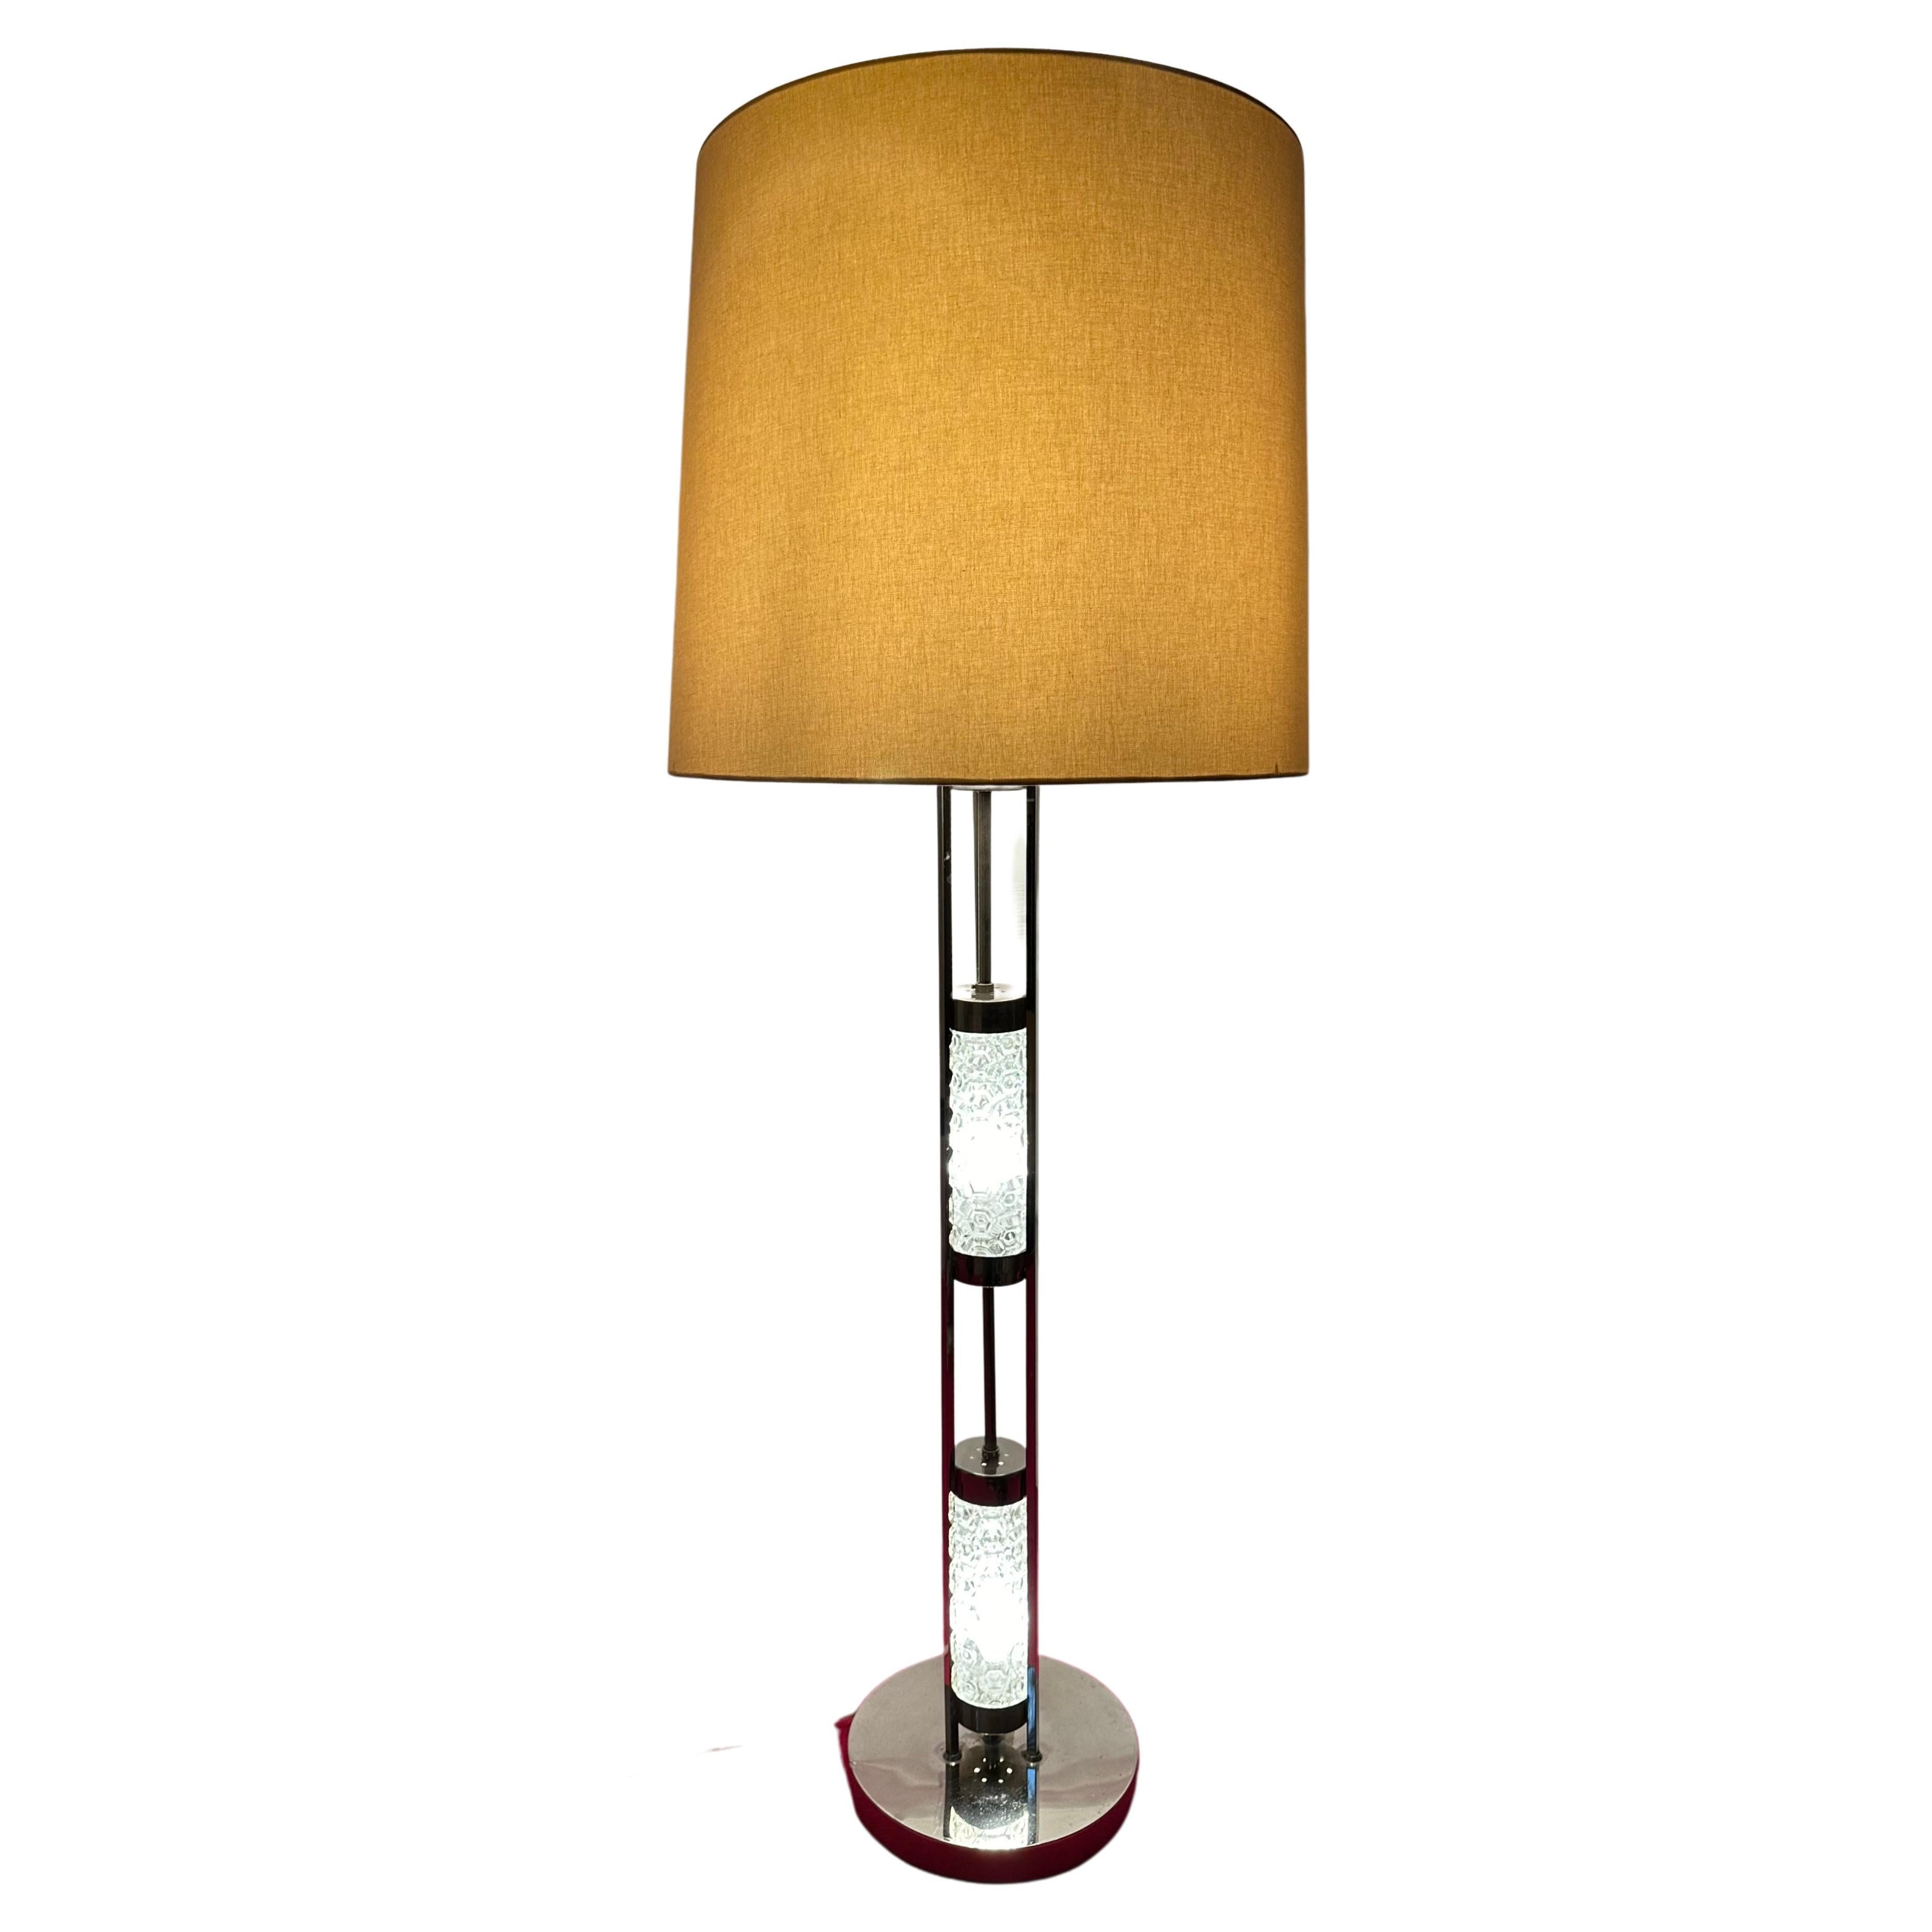 1970s German Richard Essig for Besigheim Illuminated Floor or Table Lamp For Sale